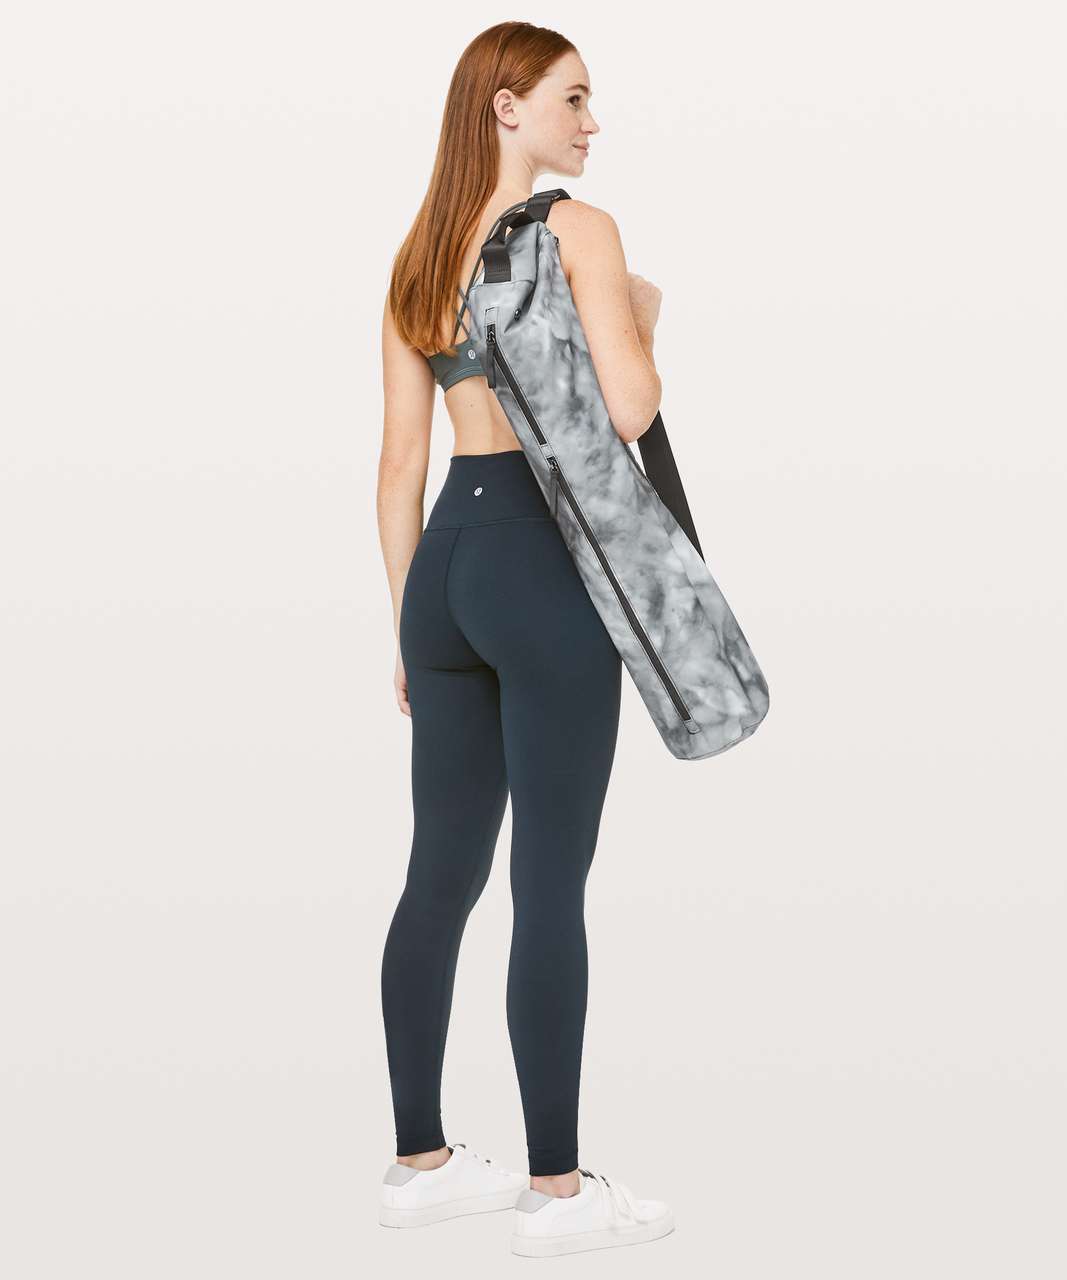 New Lululemon Adjustable Yoga Mat Bag